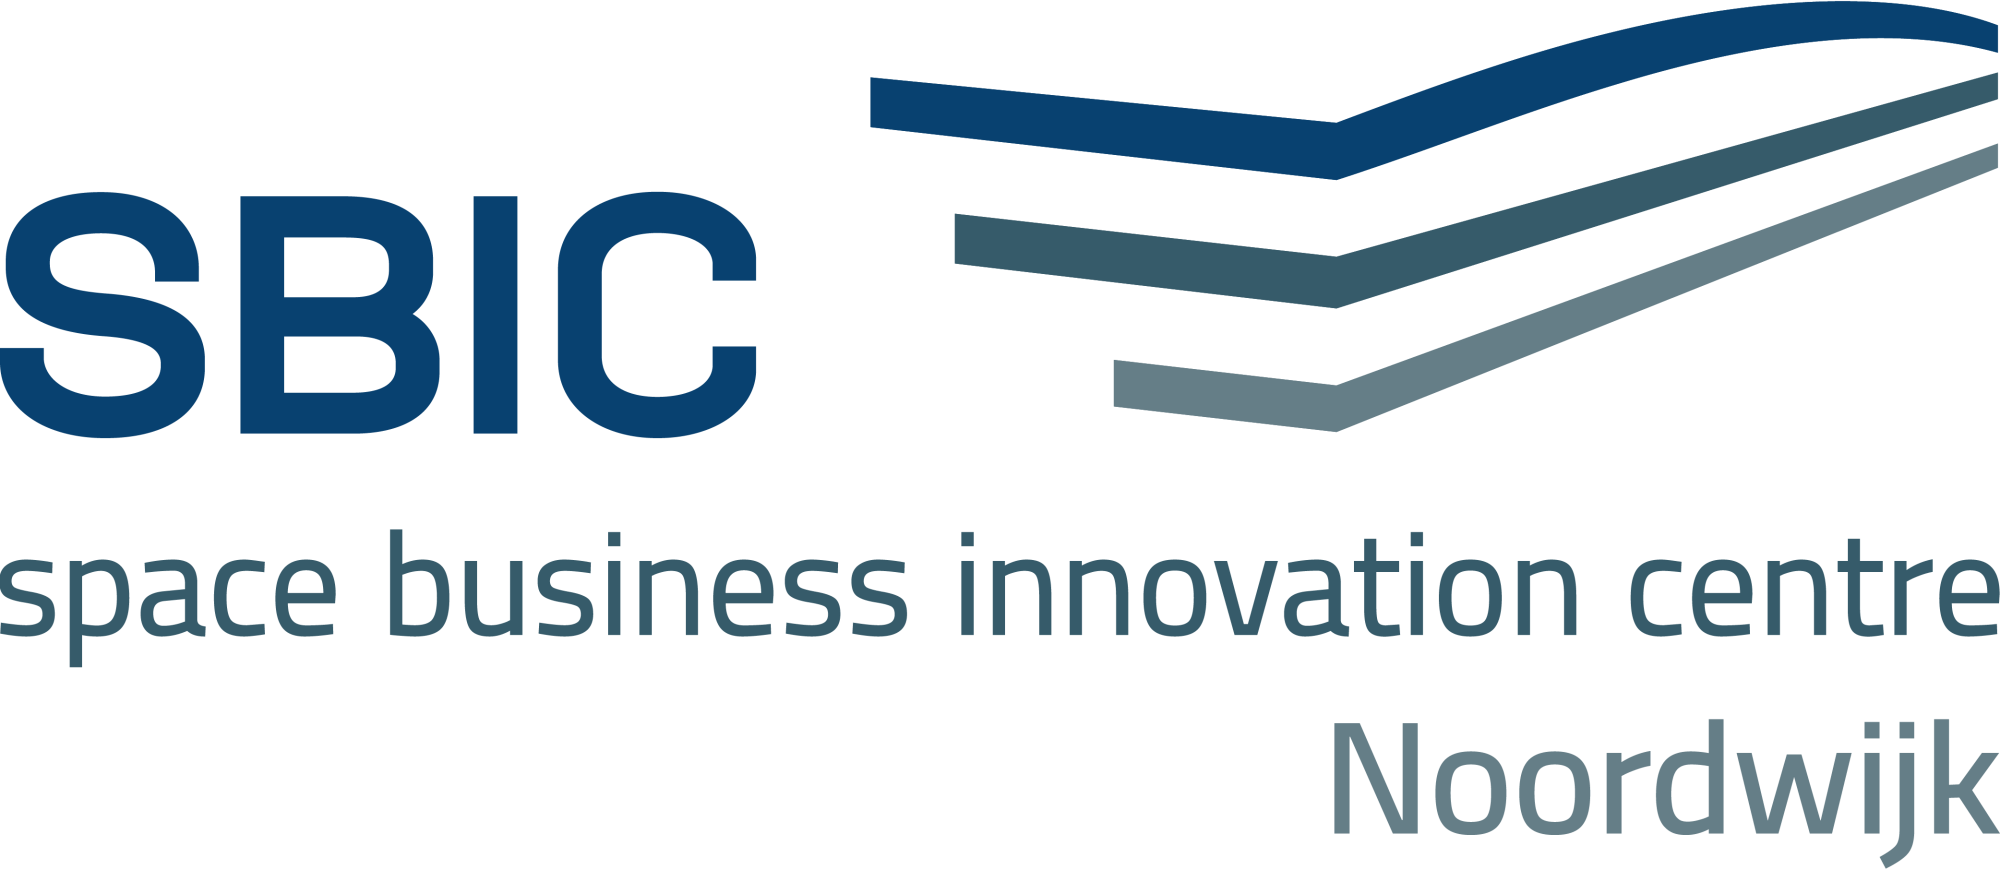 SBIC space business innovation centre Noordwijk